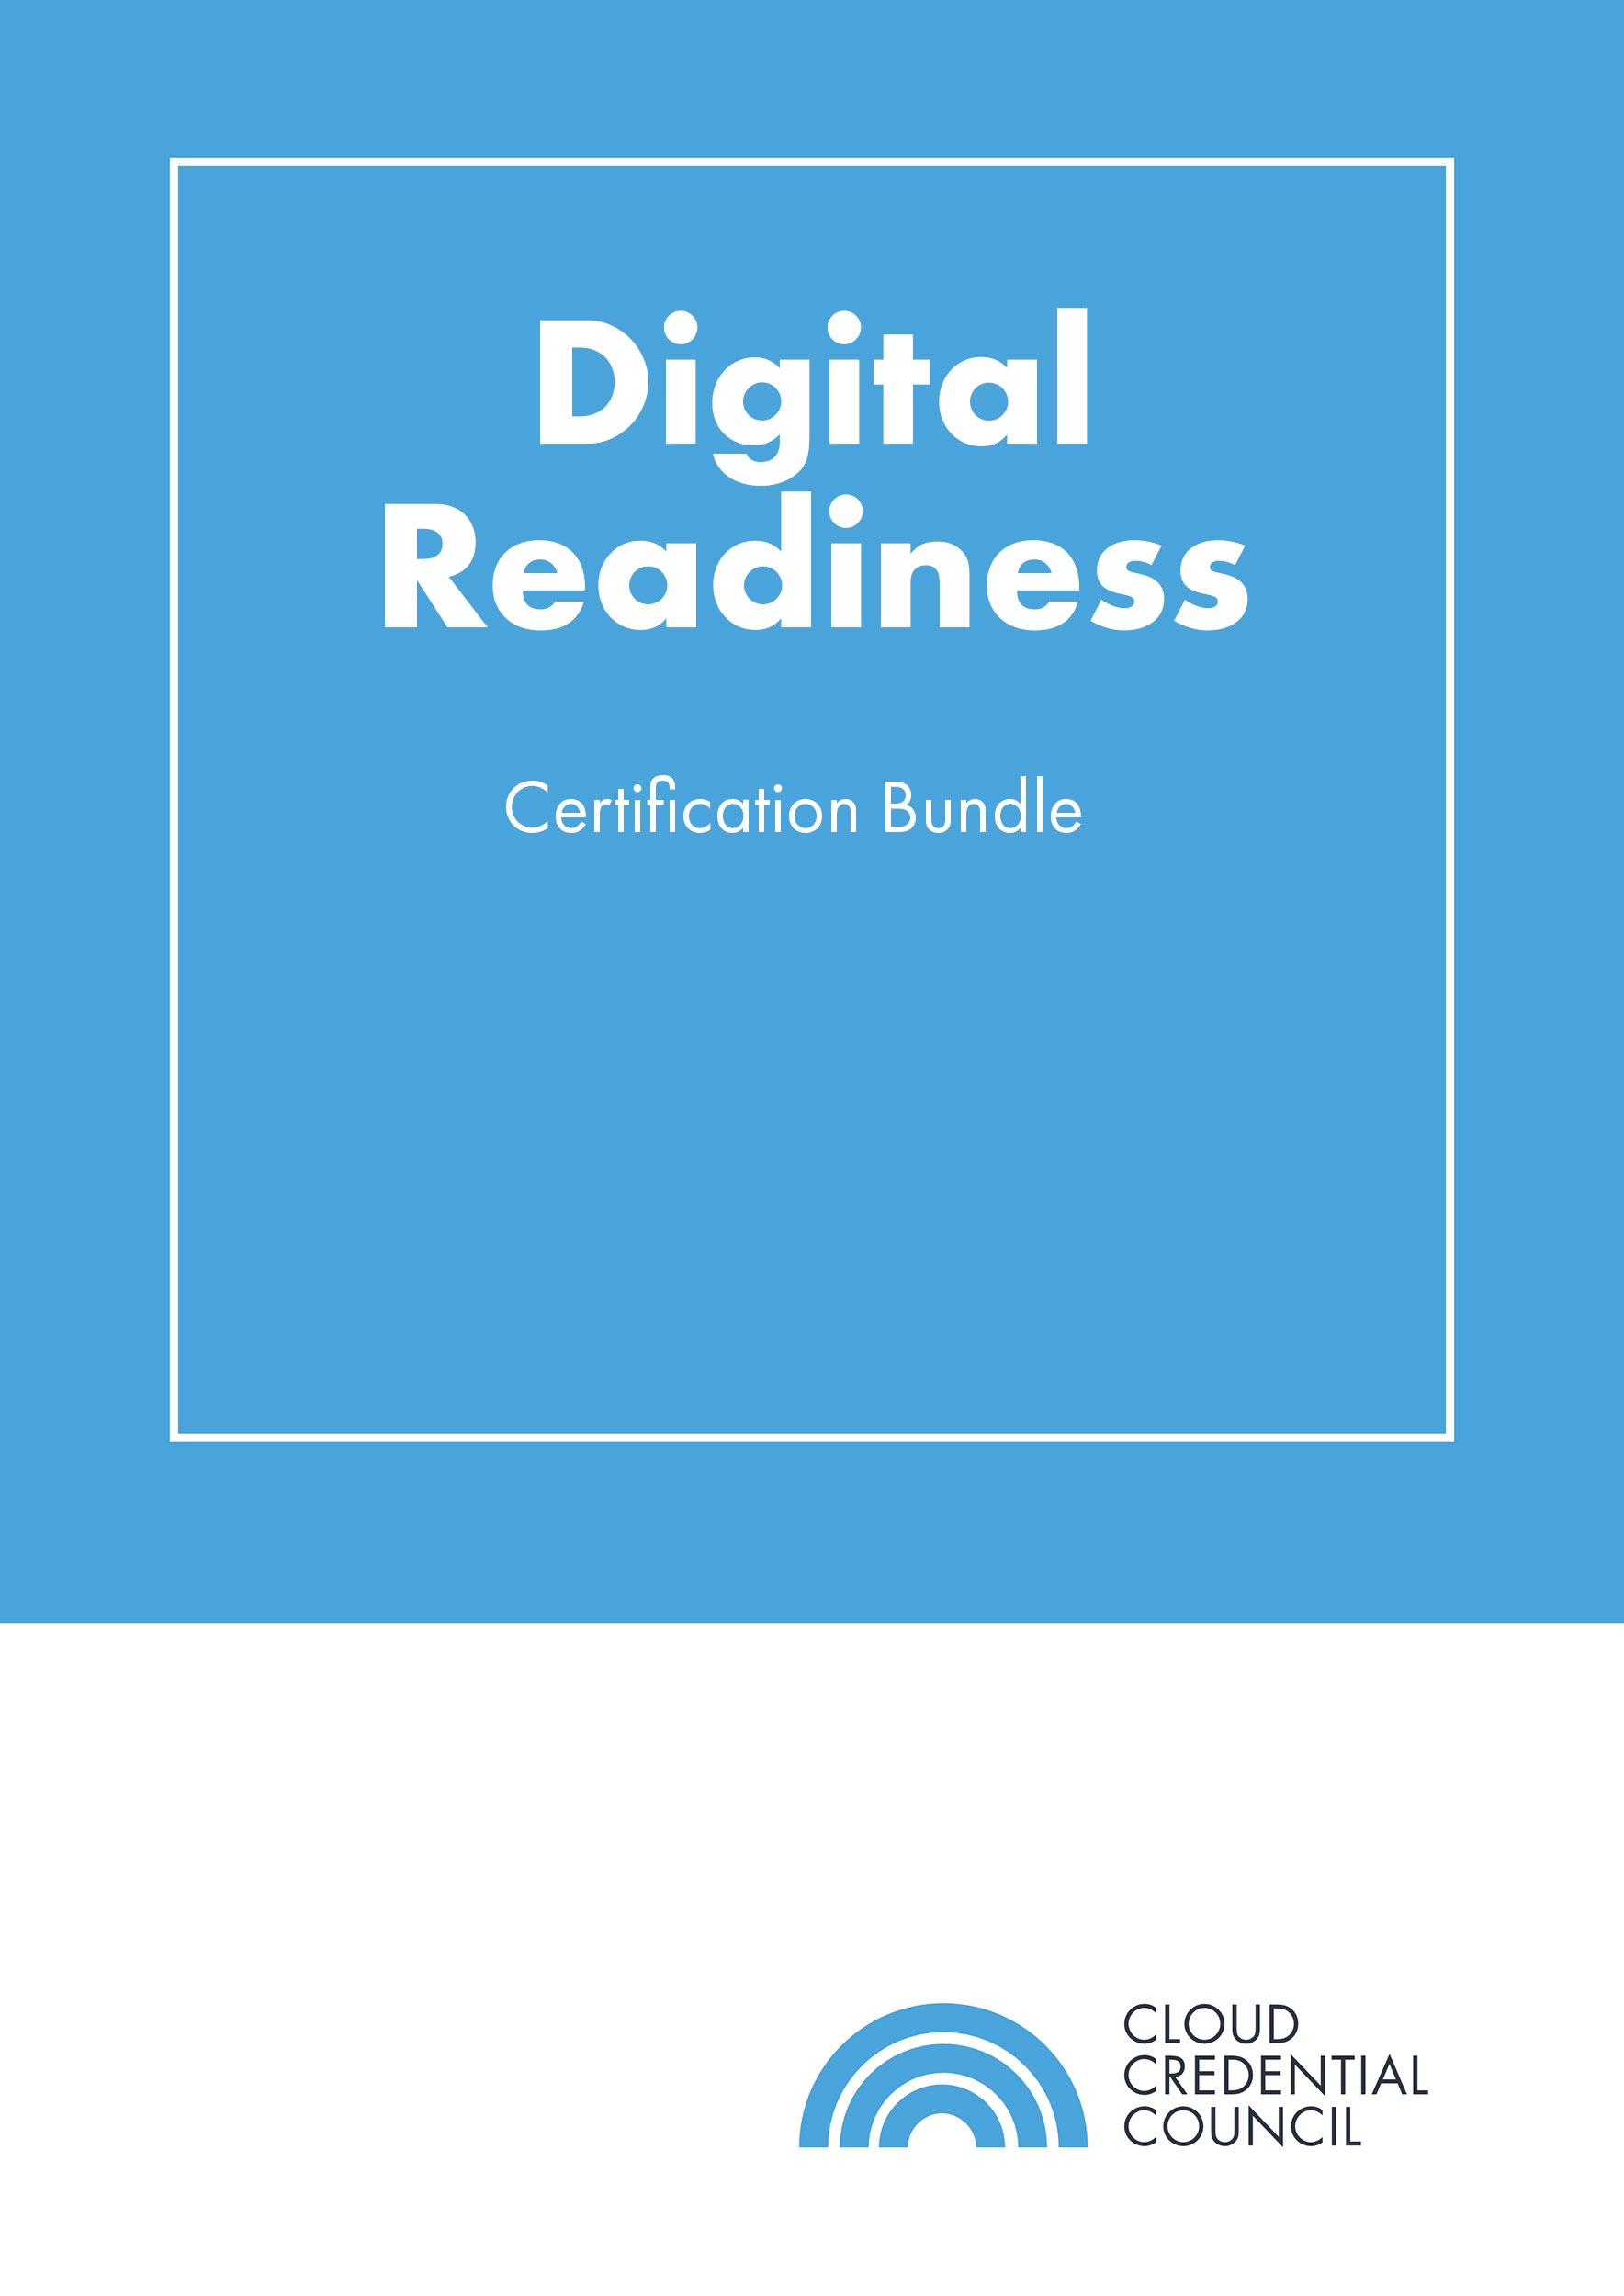 Digital Readiness Certification Bundle